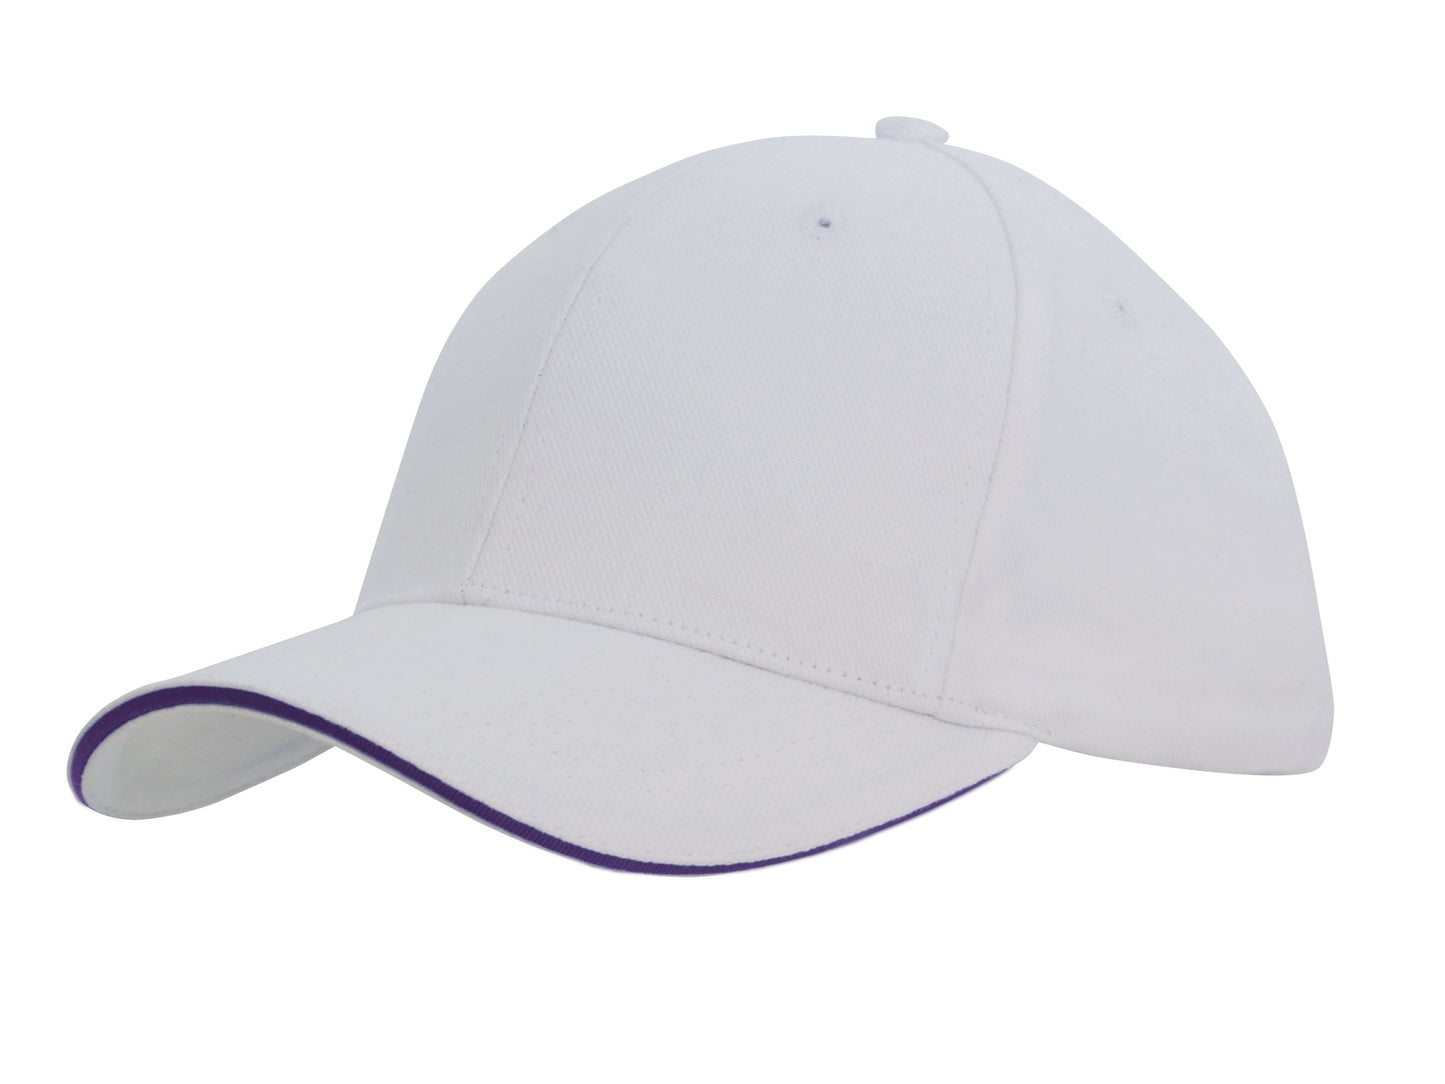 Headwear Brushed Heavy Cotton Cap With Sandwich Trim X12 - 4210 Cap Headwear Professionals White/Purple One Size 